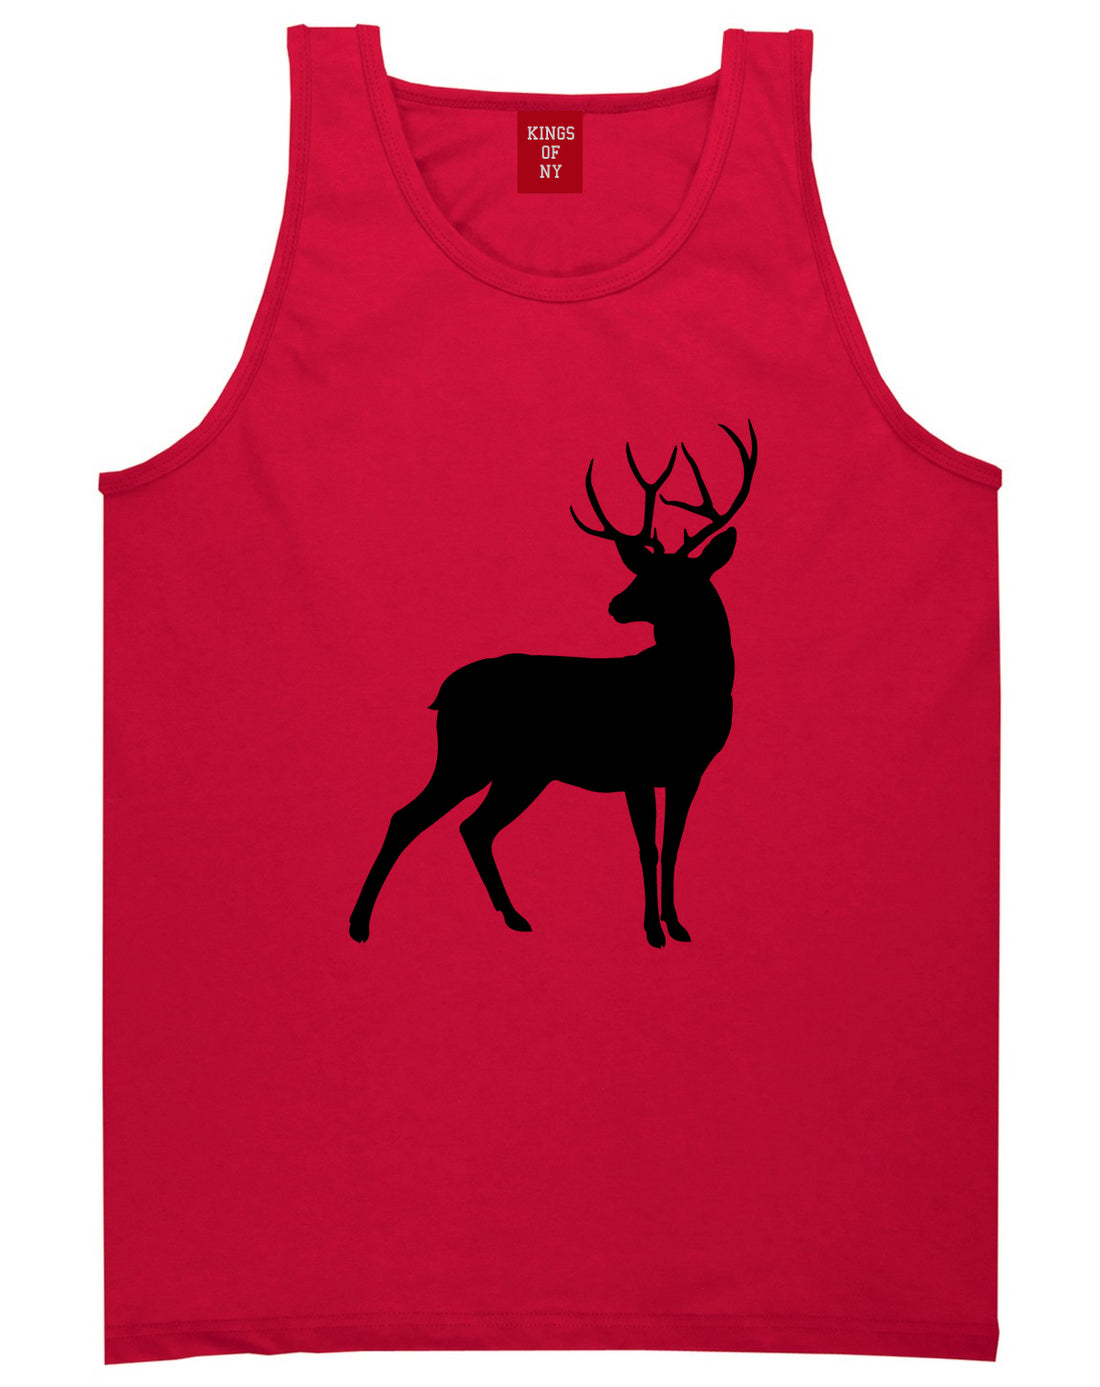 Deer_Hunting_Hunter Mens Red Tank Top Shirt by Kings Of NY